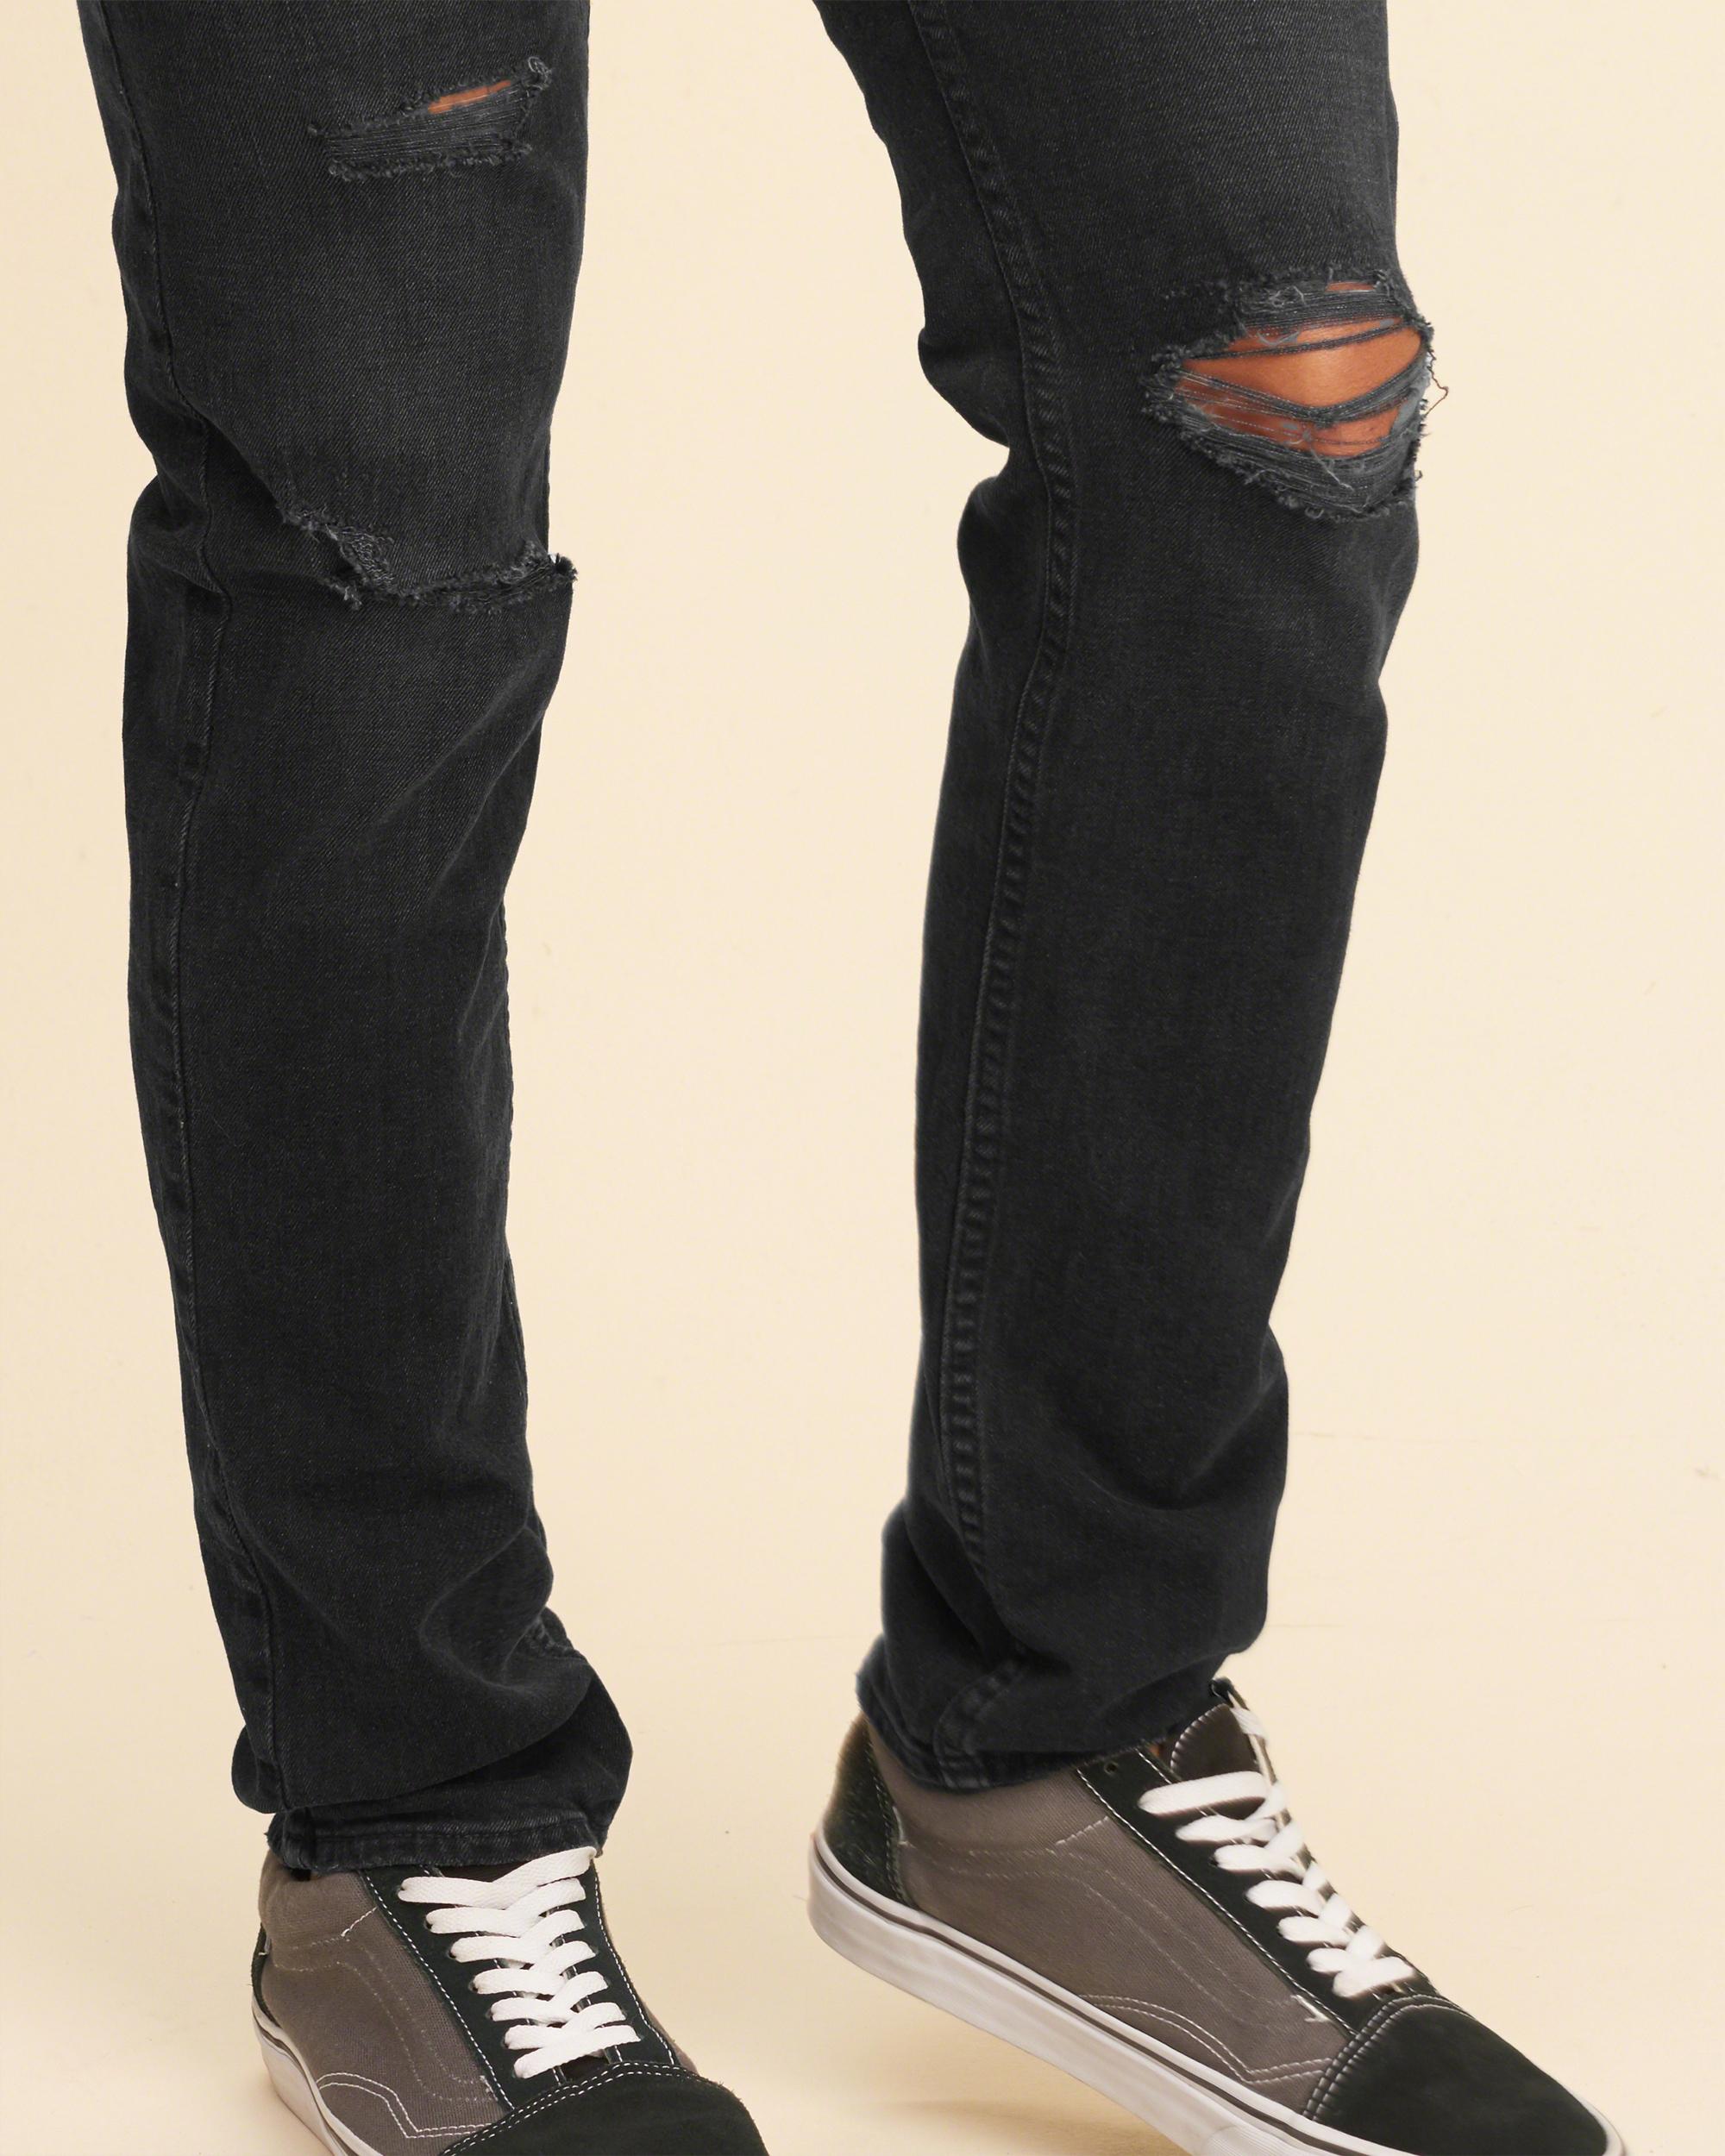 Lyst - Hollister Skinny Jeans in Black for Men